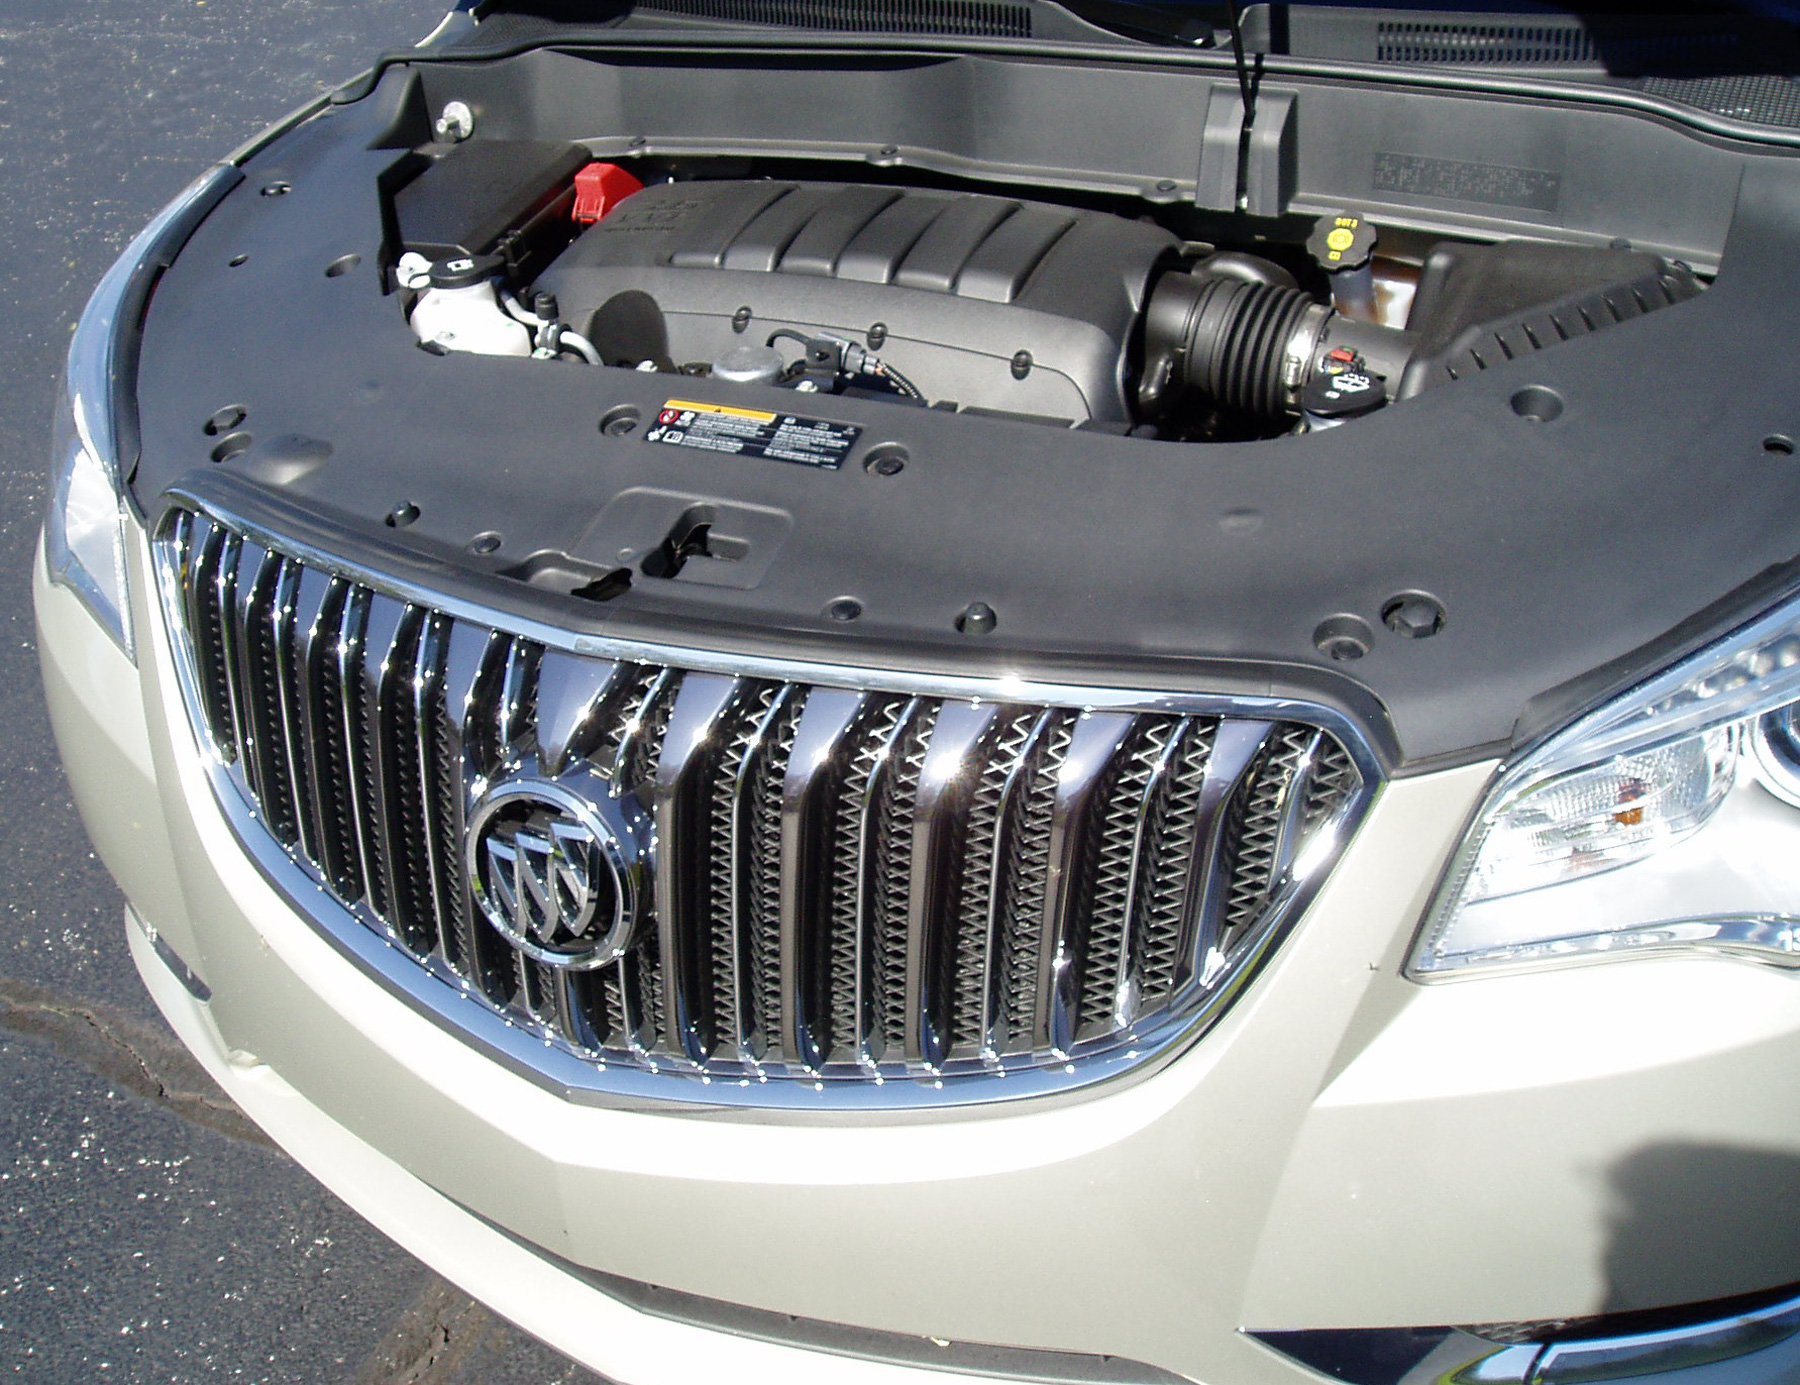 Test Drive: 2013 Buick Enclave | Our Auto Expert